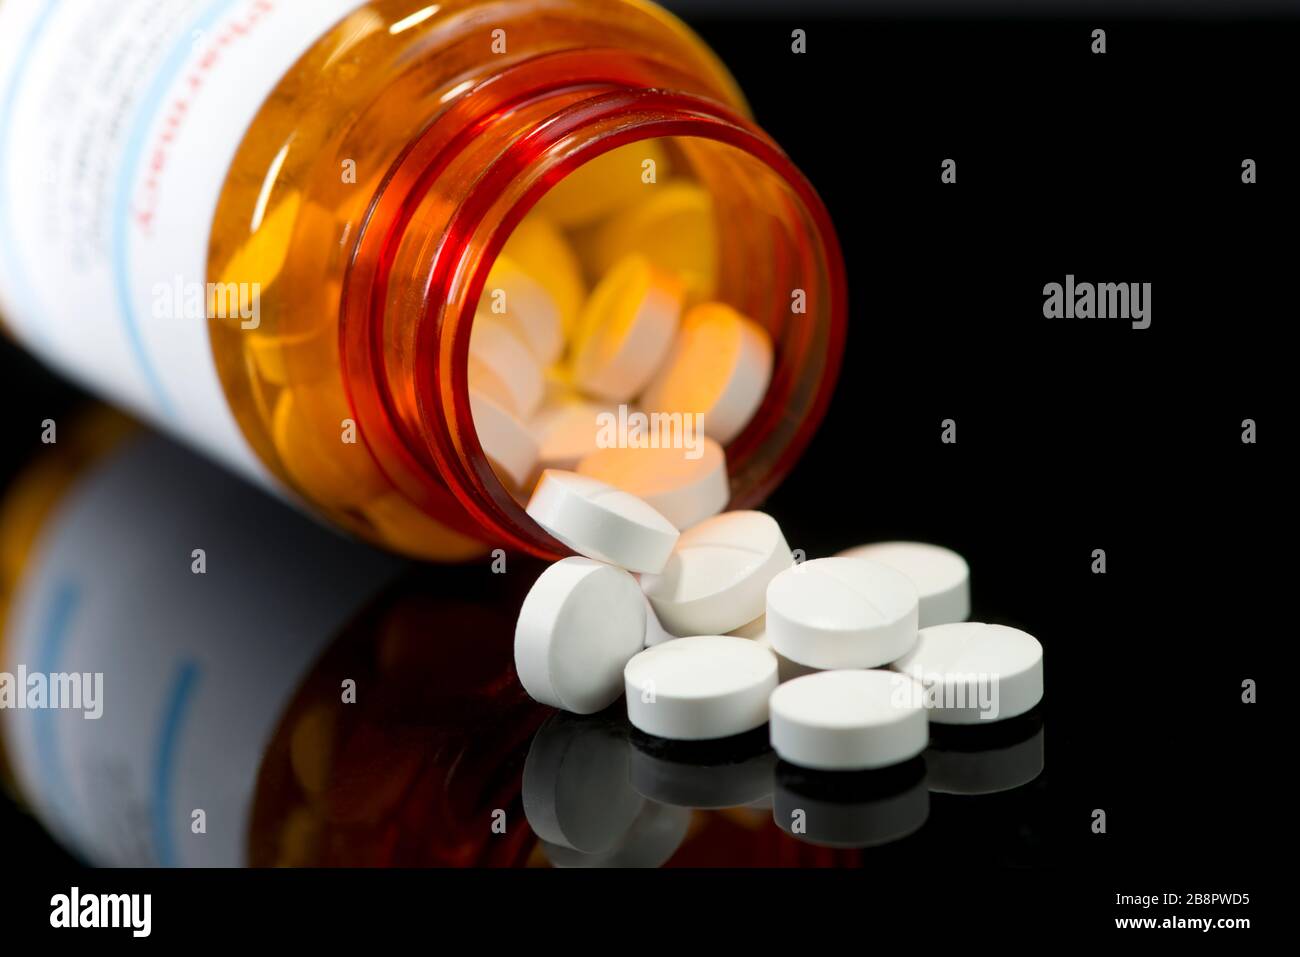 White tablets spill from prescription medicine bottle on black reflective surface. Stock Photo